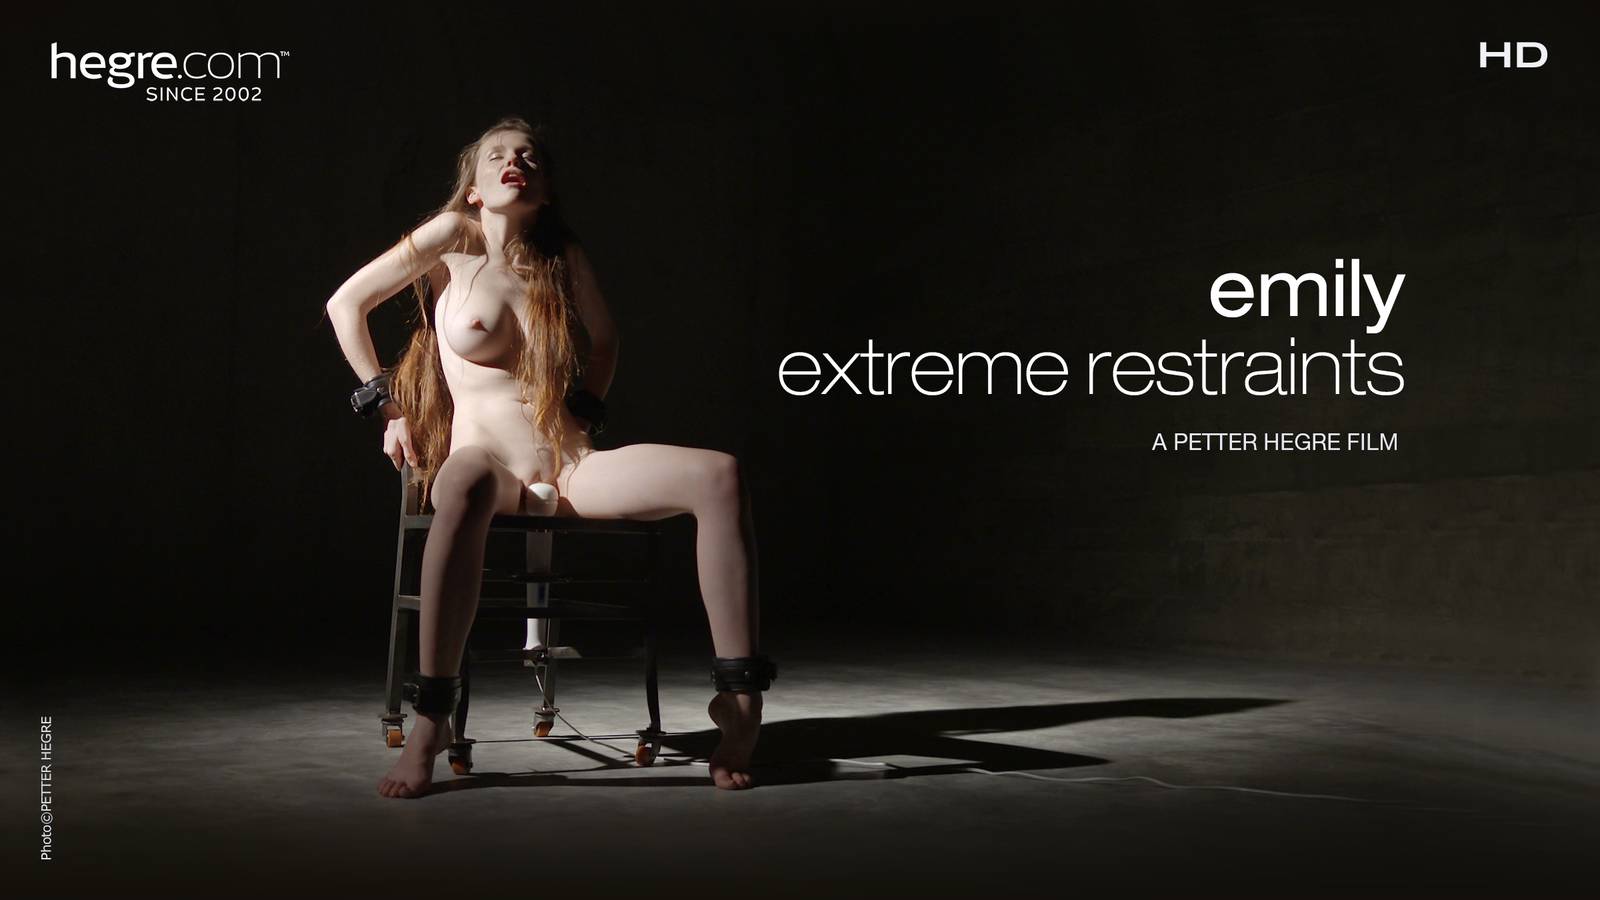 emily-extreme-restraints-board-image-1600x.jpg